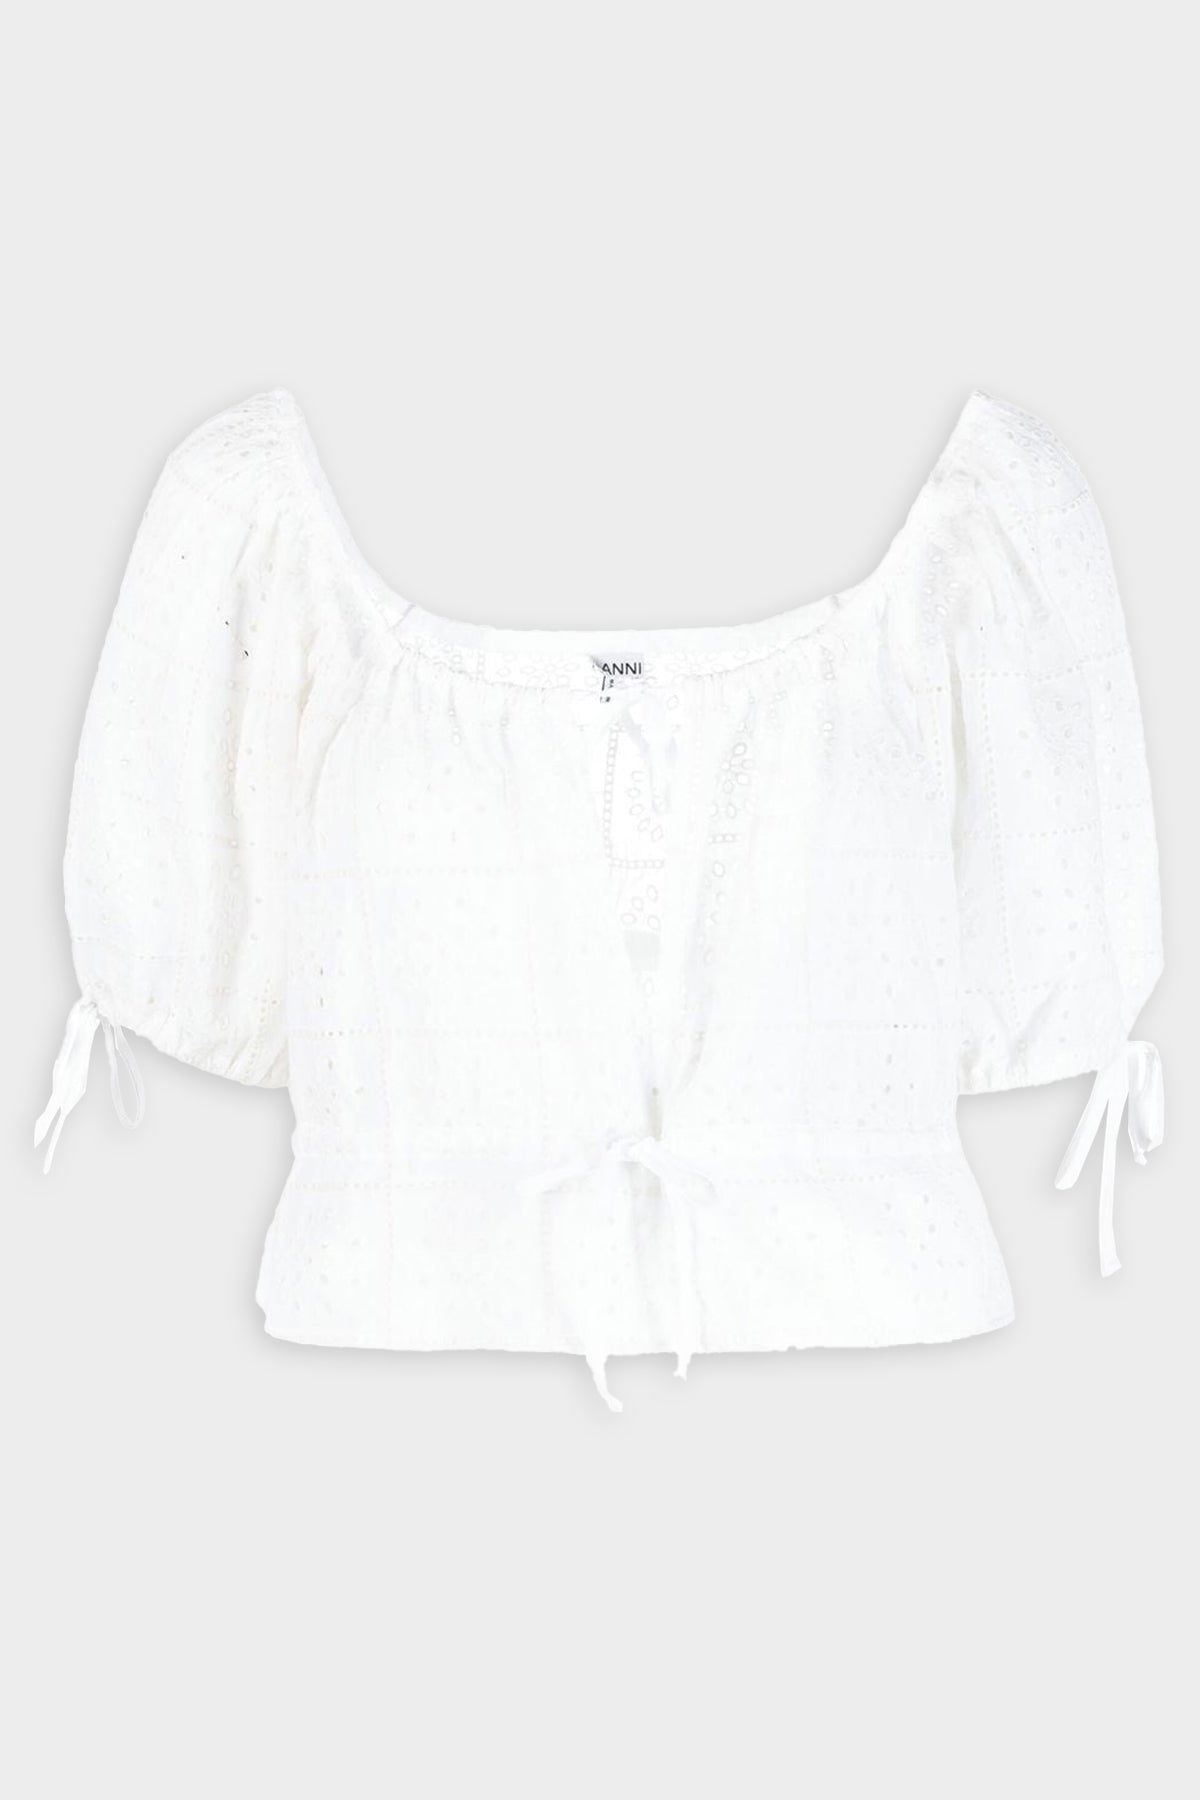 Women Vest Tank White Cotton Blend Lace Trim Sleeveless Crop Tops T-shirt  V-Neck